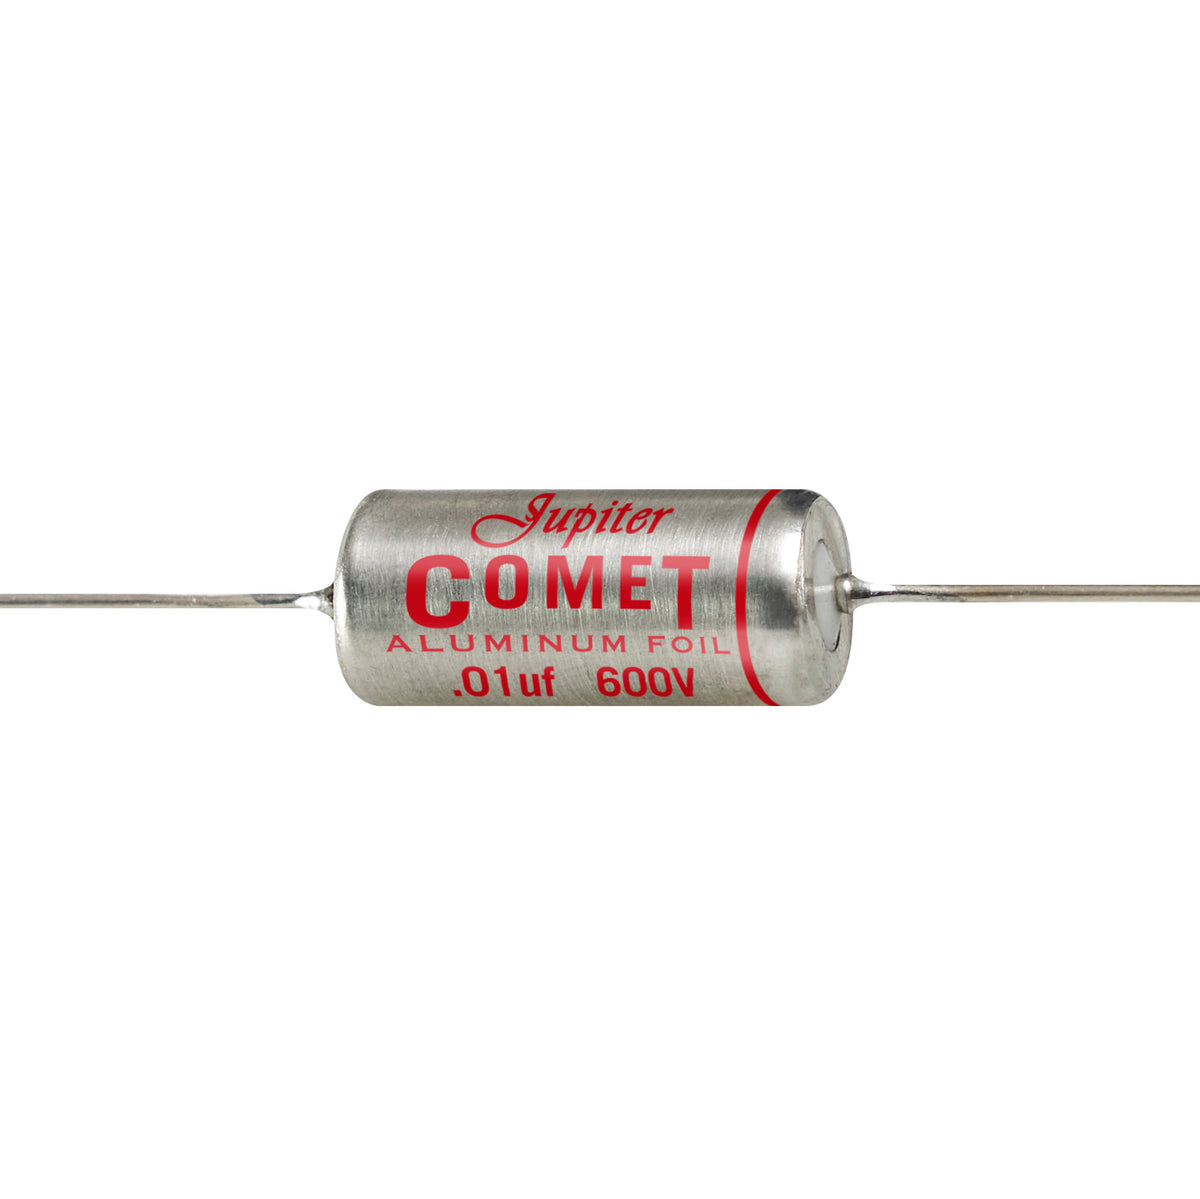 Comet - Aluminum Foil Paper-in-Oil Capacitors, Mineral Oil